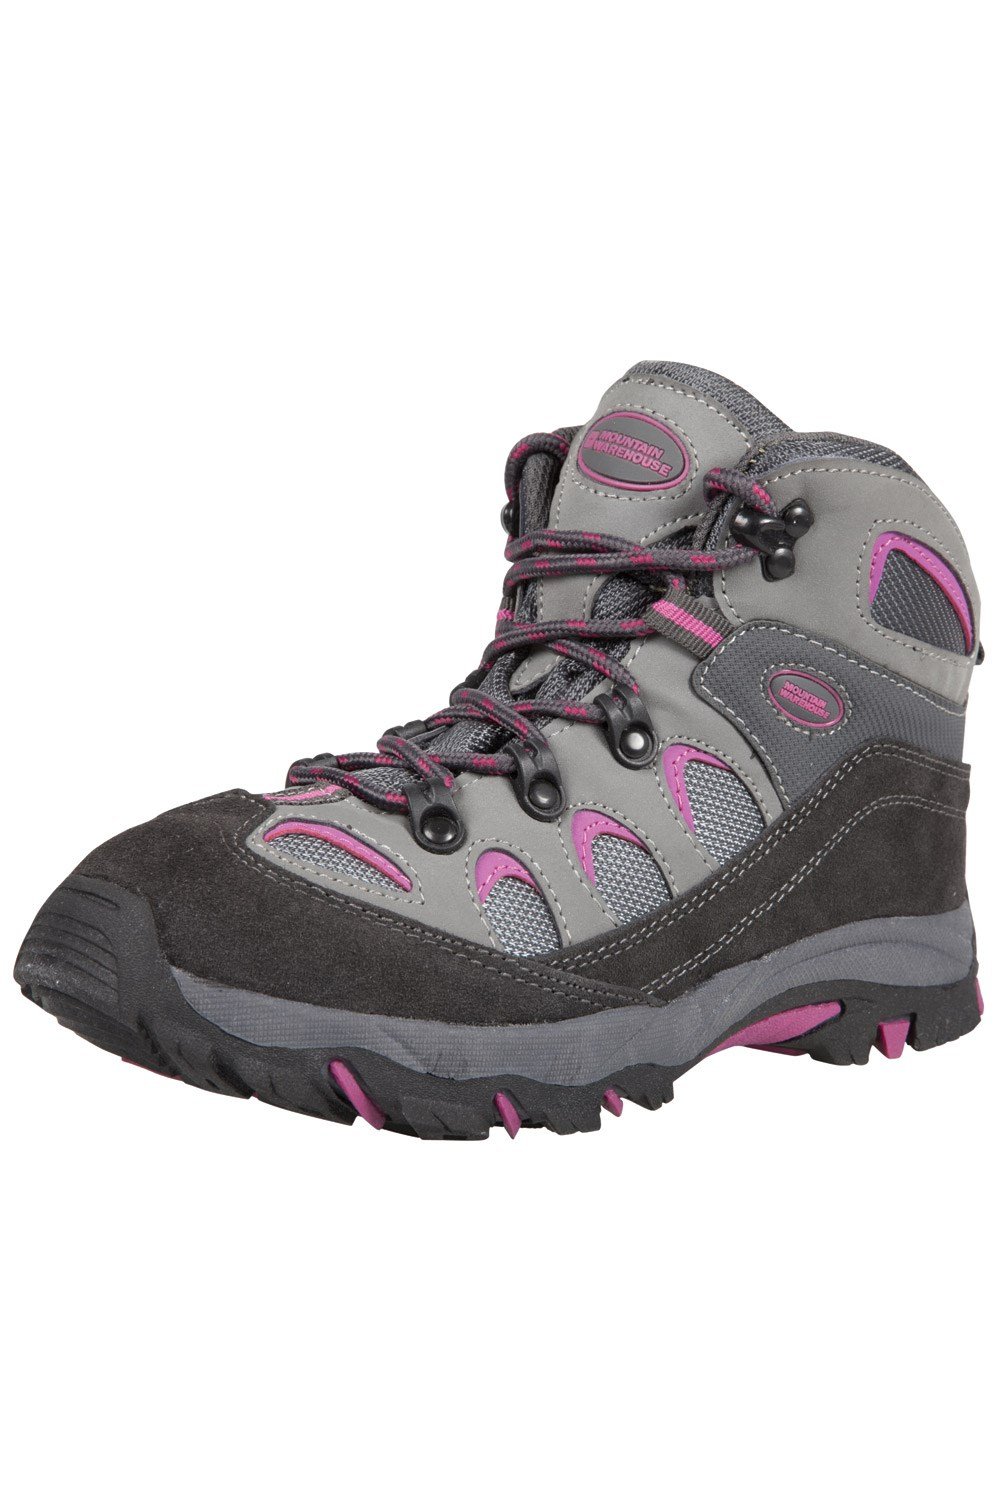 Mountain Warehouse Oscar Kids Hiking Boots for Girls & Boys 